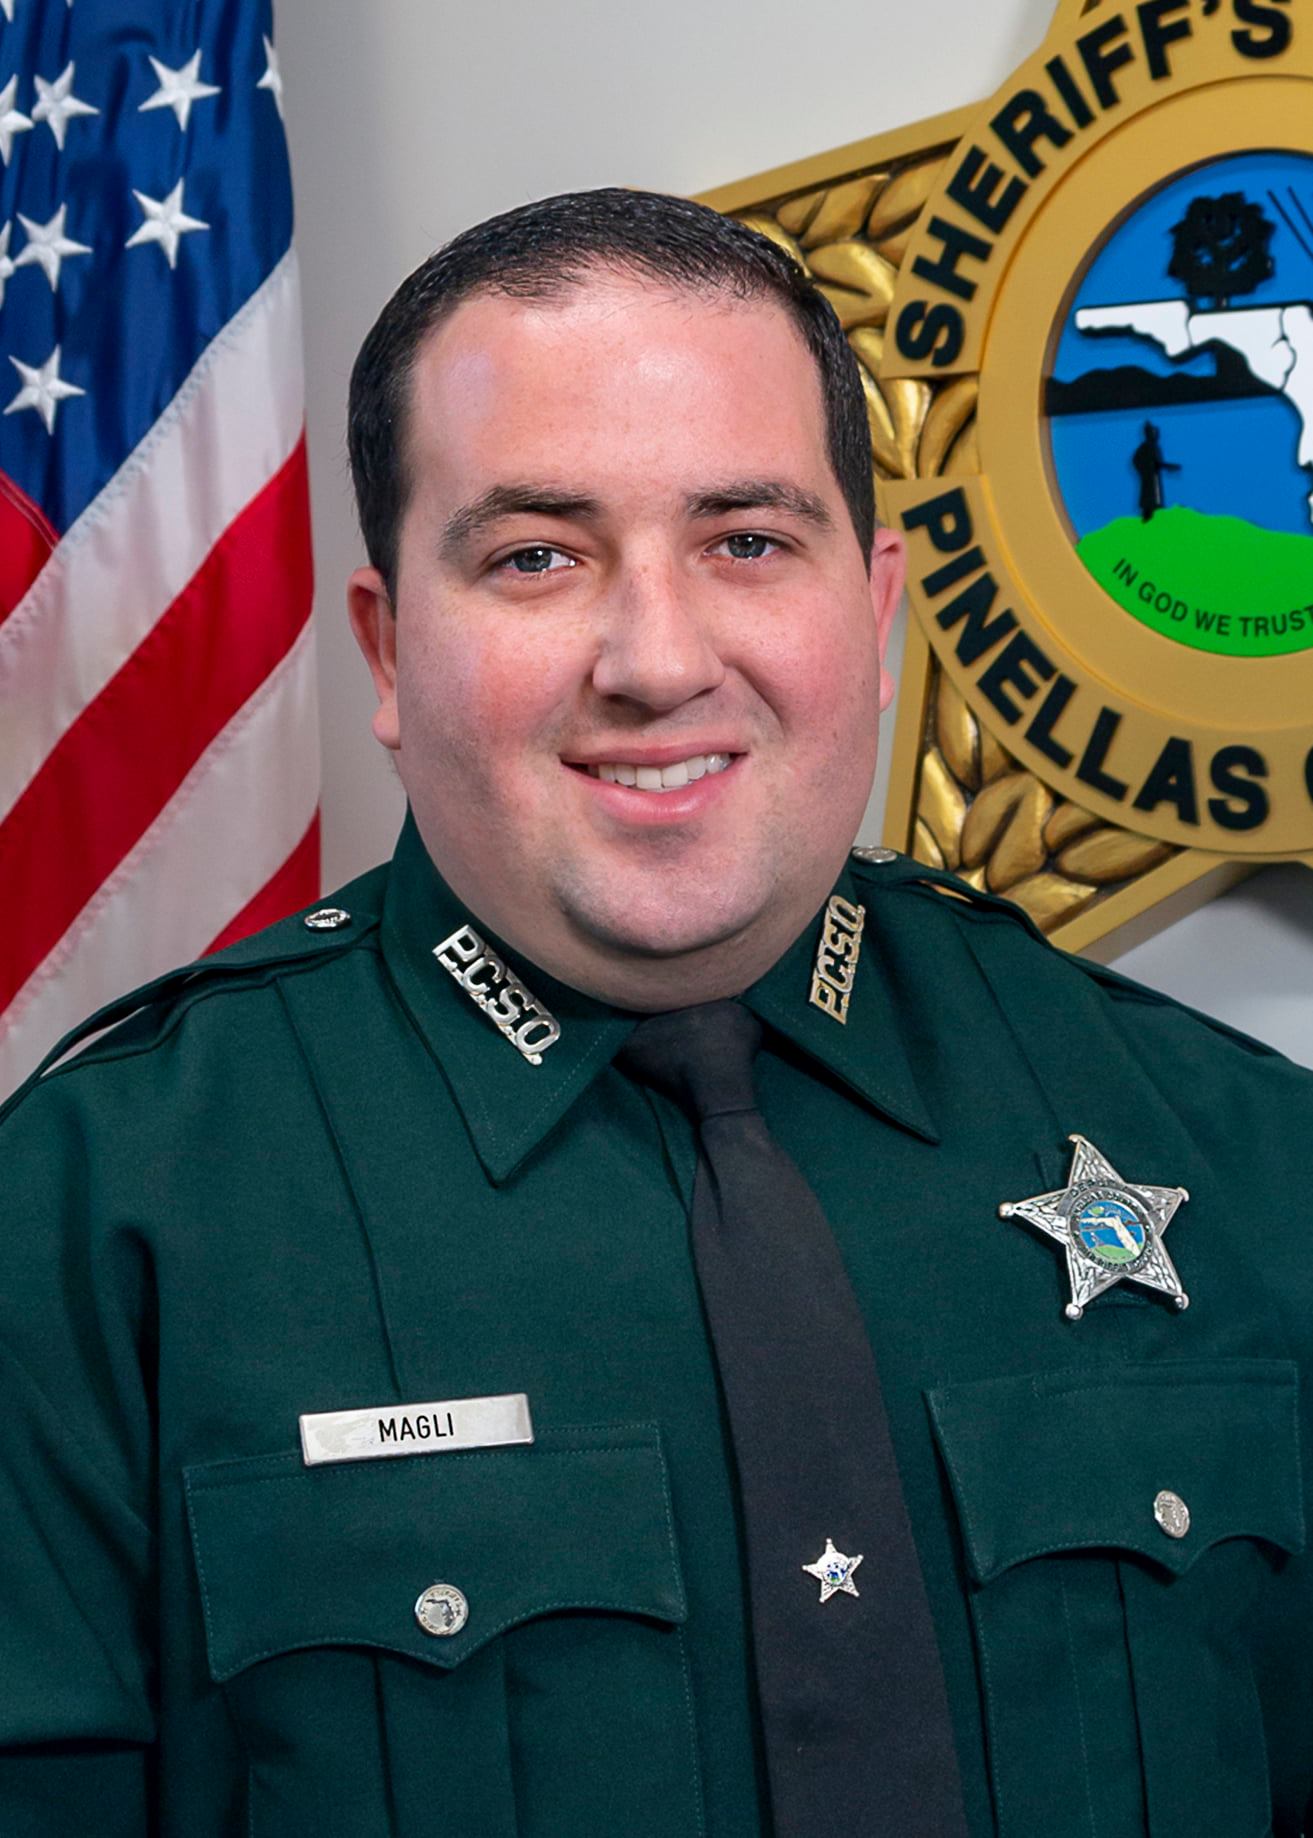 Deputy Sheriff Michael Magli | Pinellas County Sheriff's Office, Florida